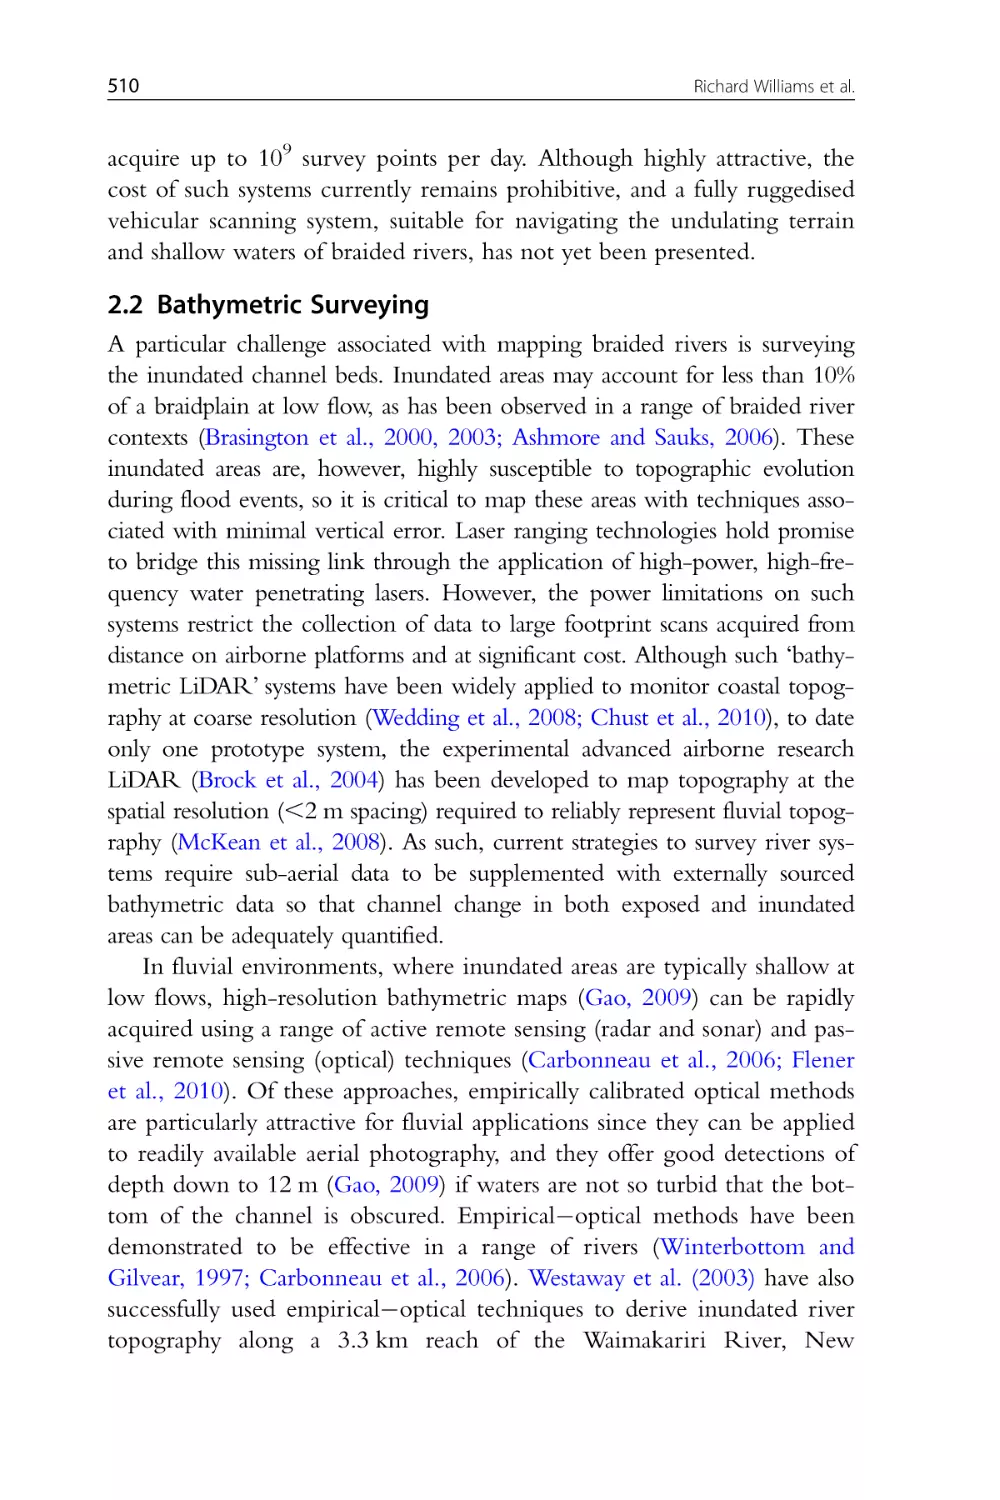 2.2 Bathymetric Surveying